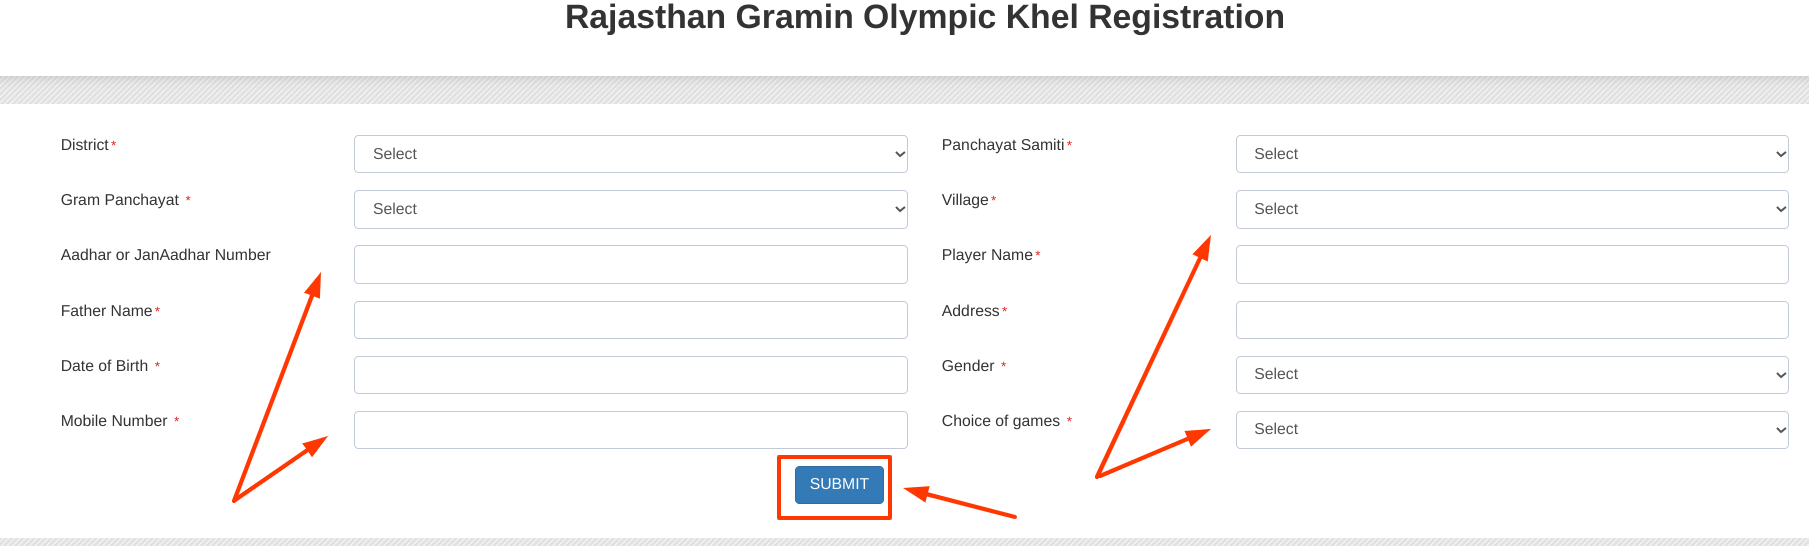 Rajasthan Gramin Olympic Khel - online application form